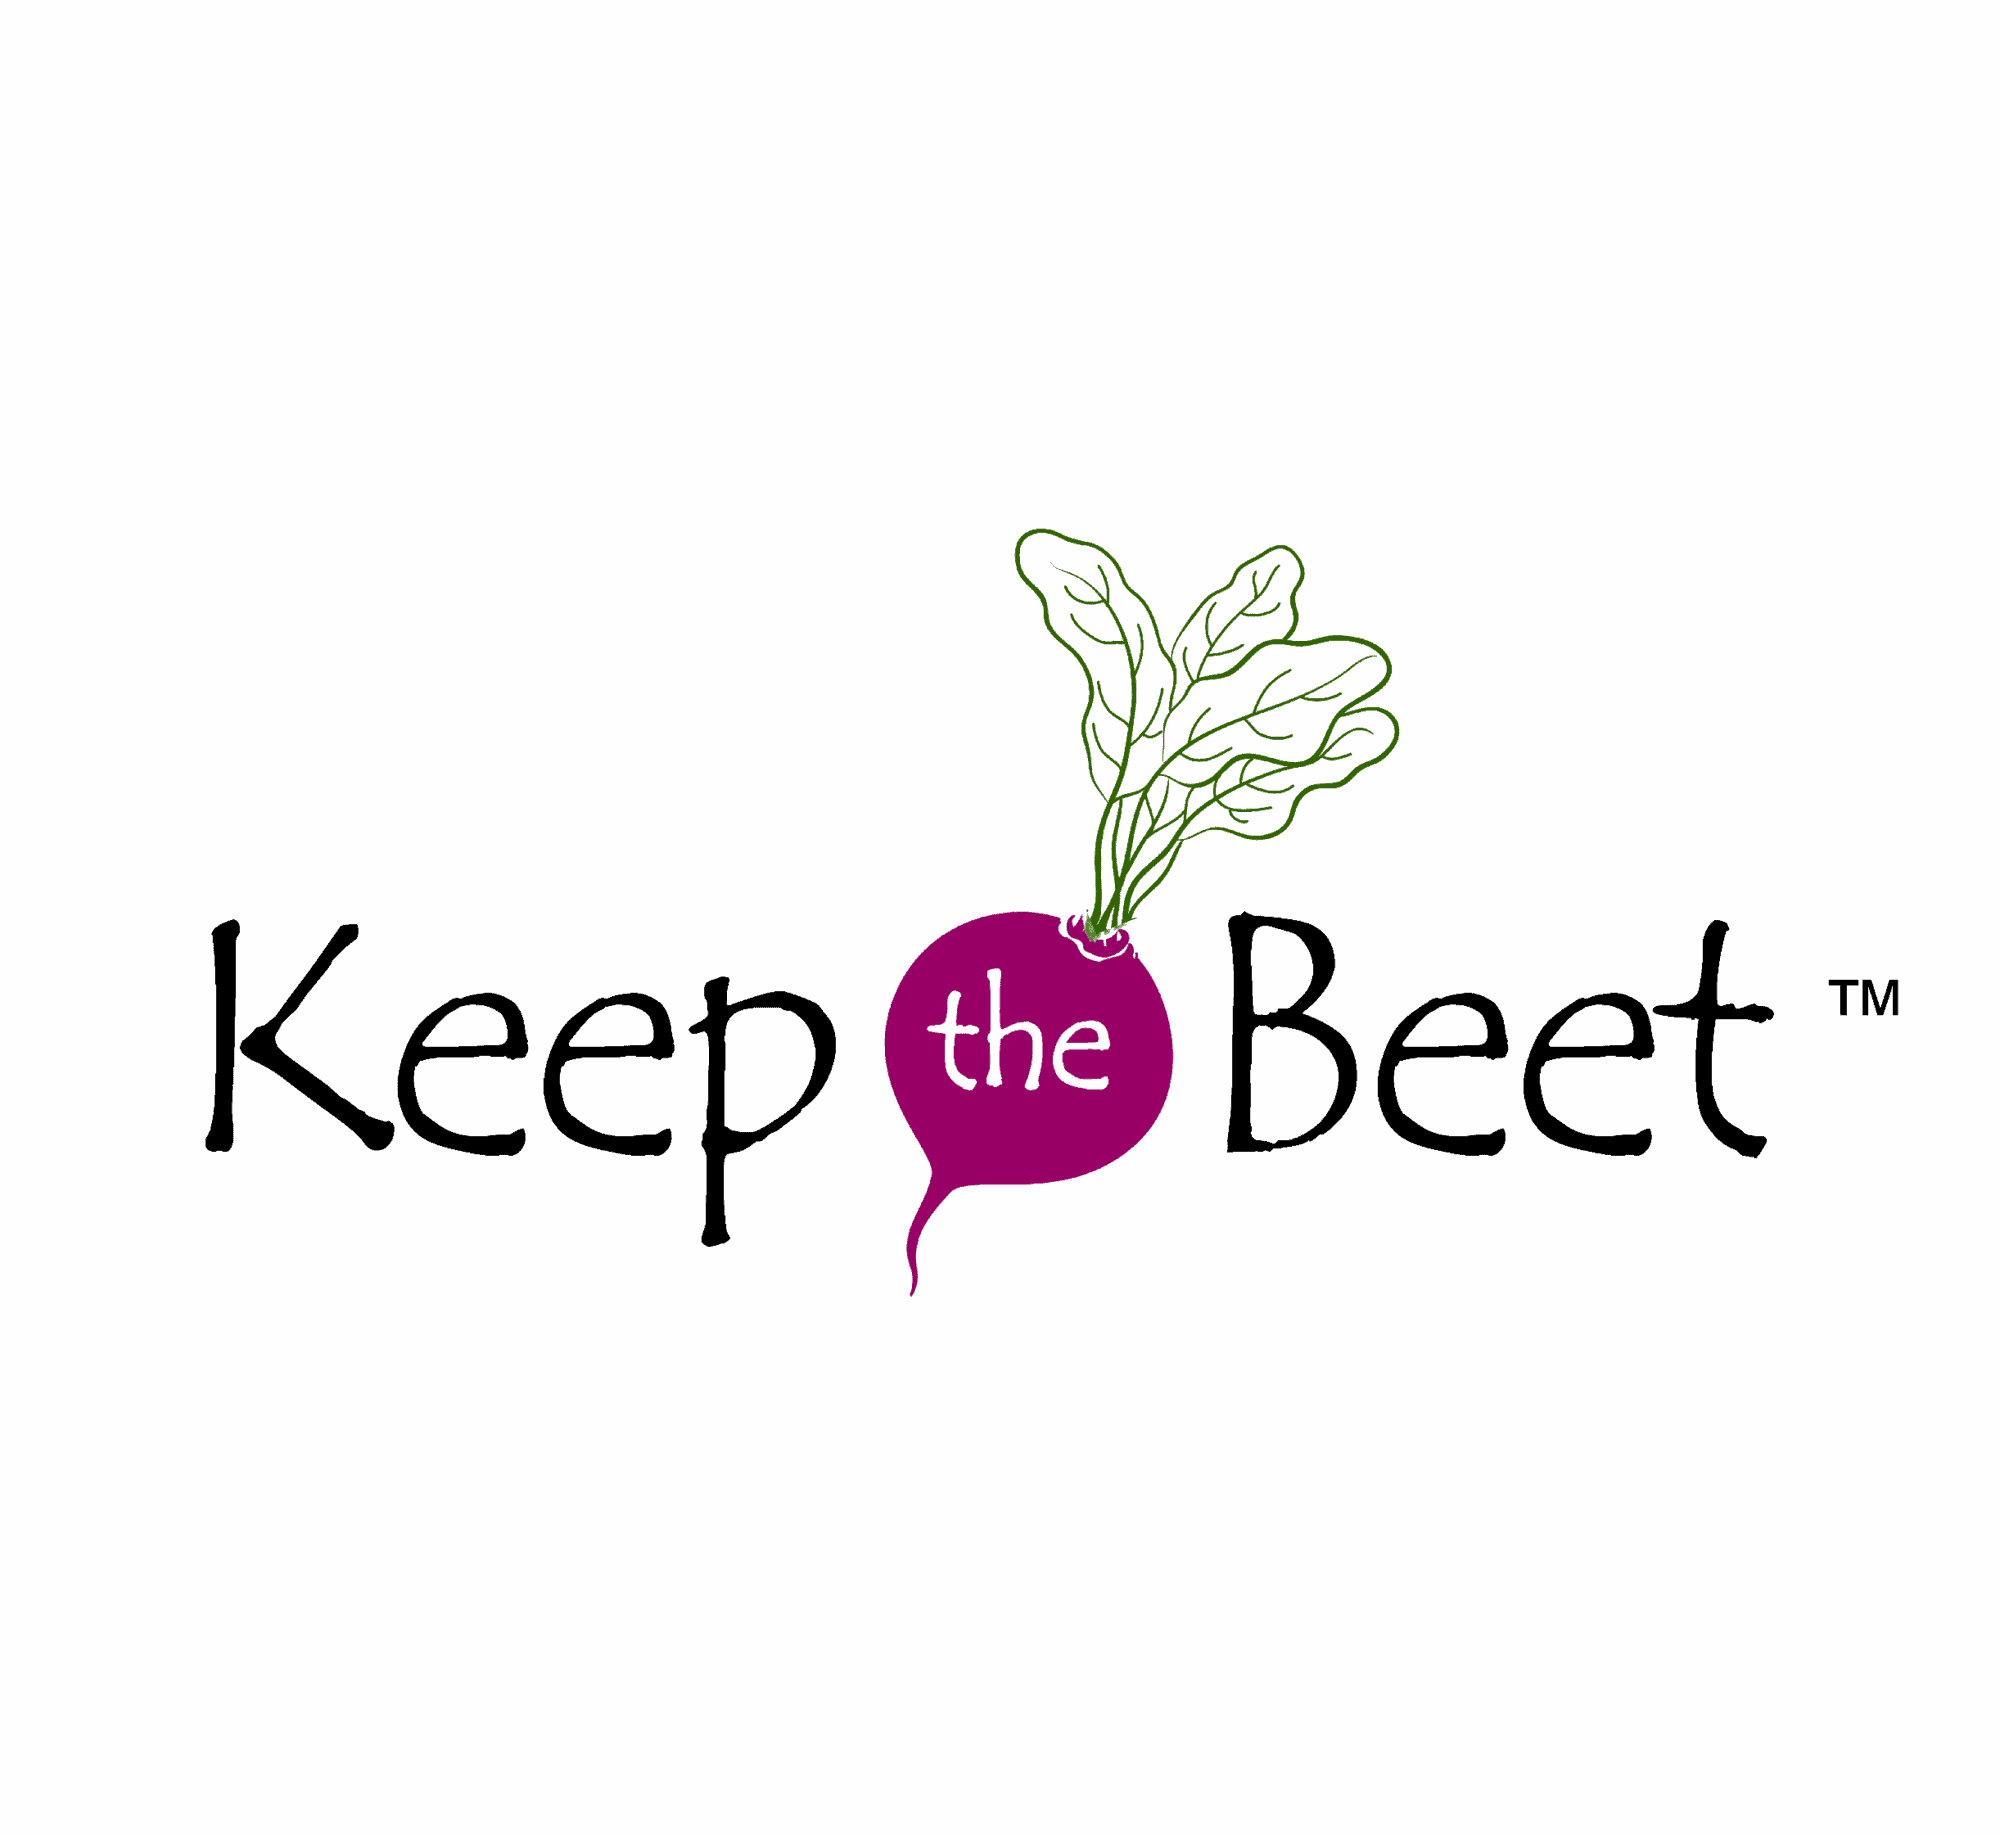 Keep-the-Beet, logo by New Paradigm graphic design, Santa Rosa, CA